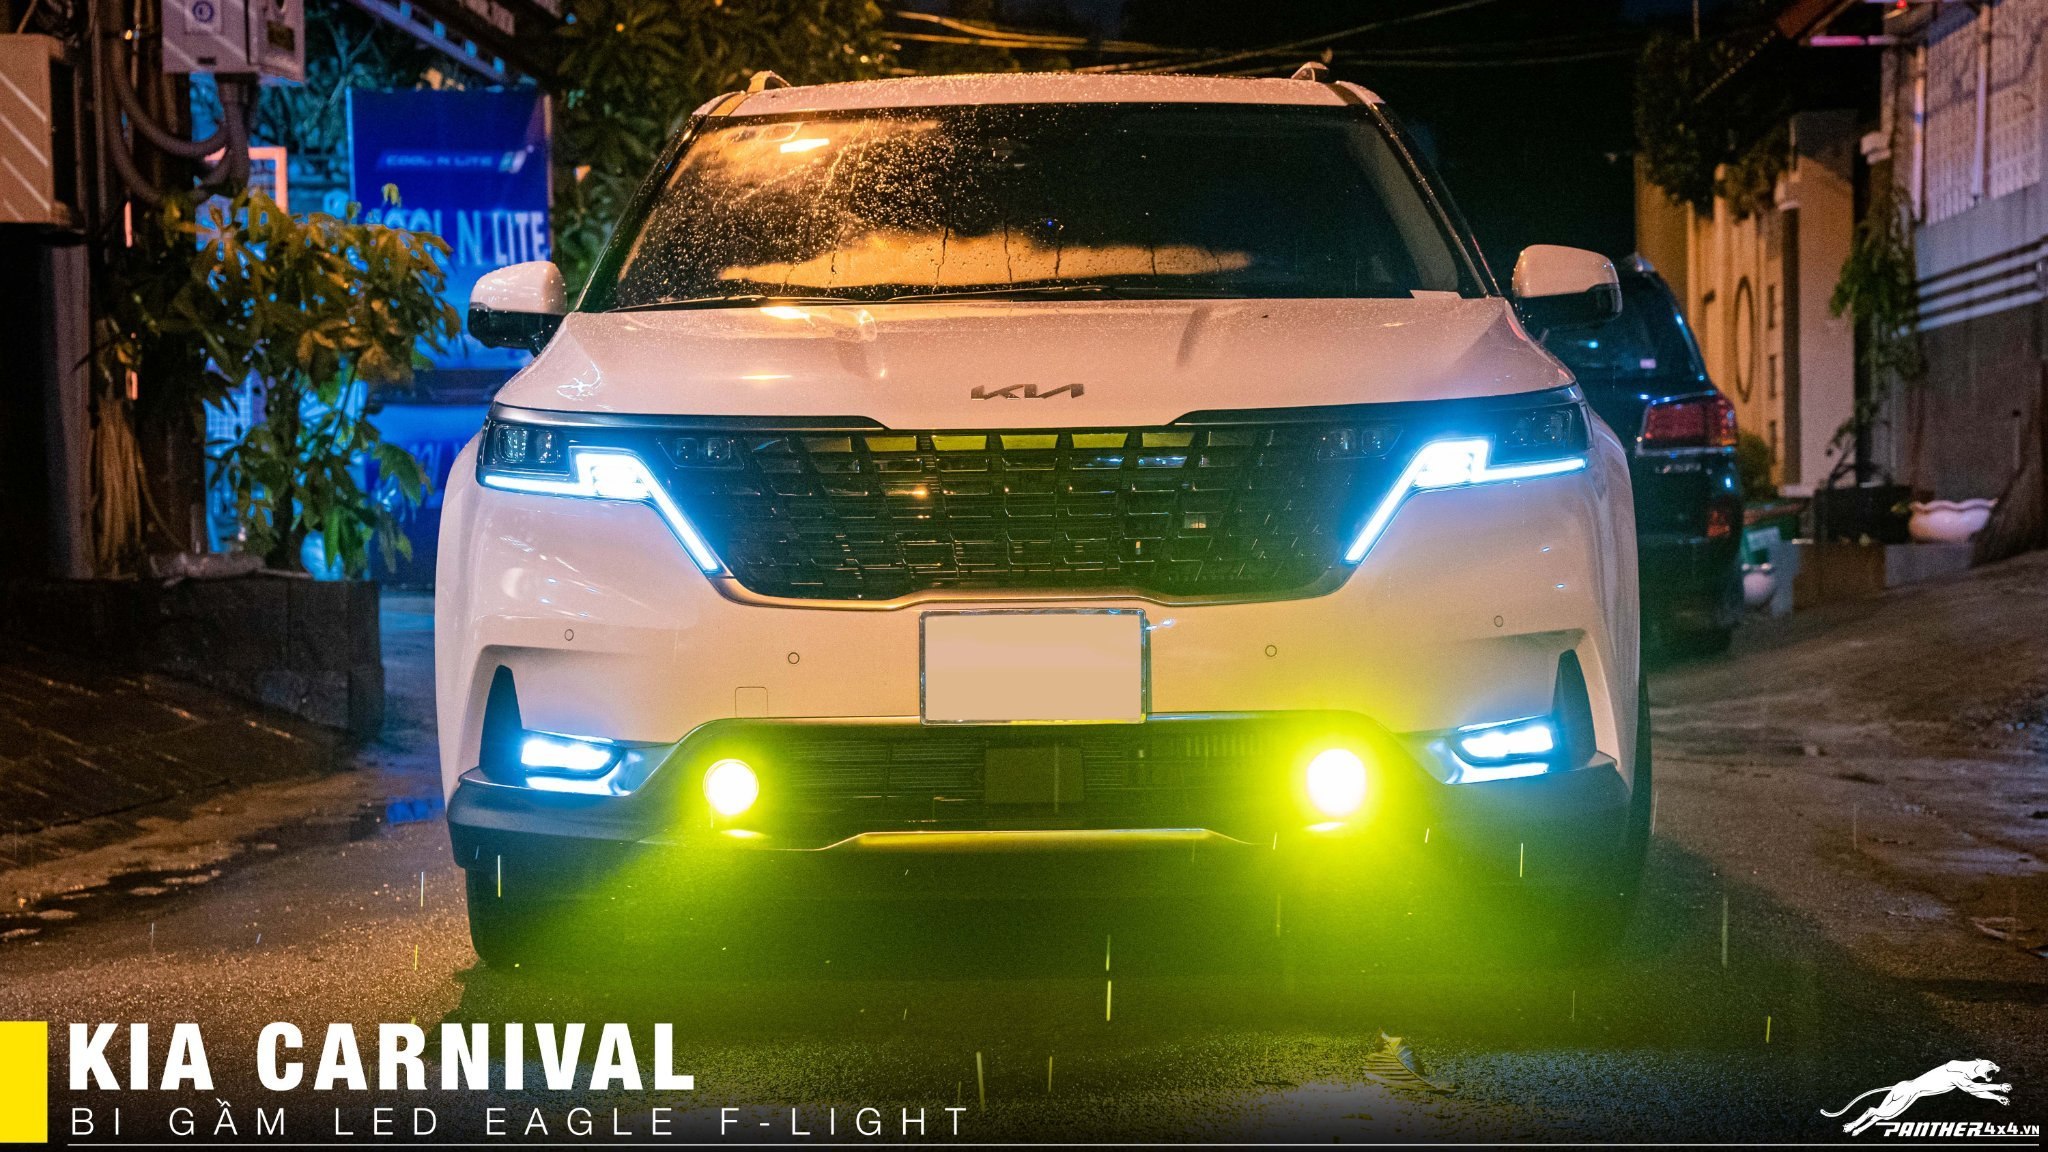 bi LED gầm Eagle F-Light cho Kia Carnival